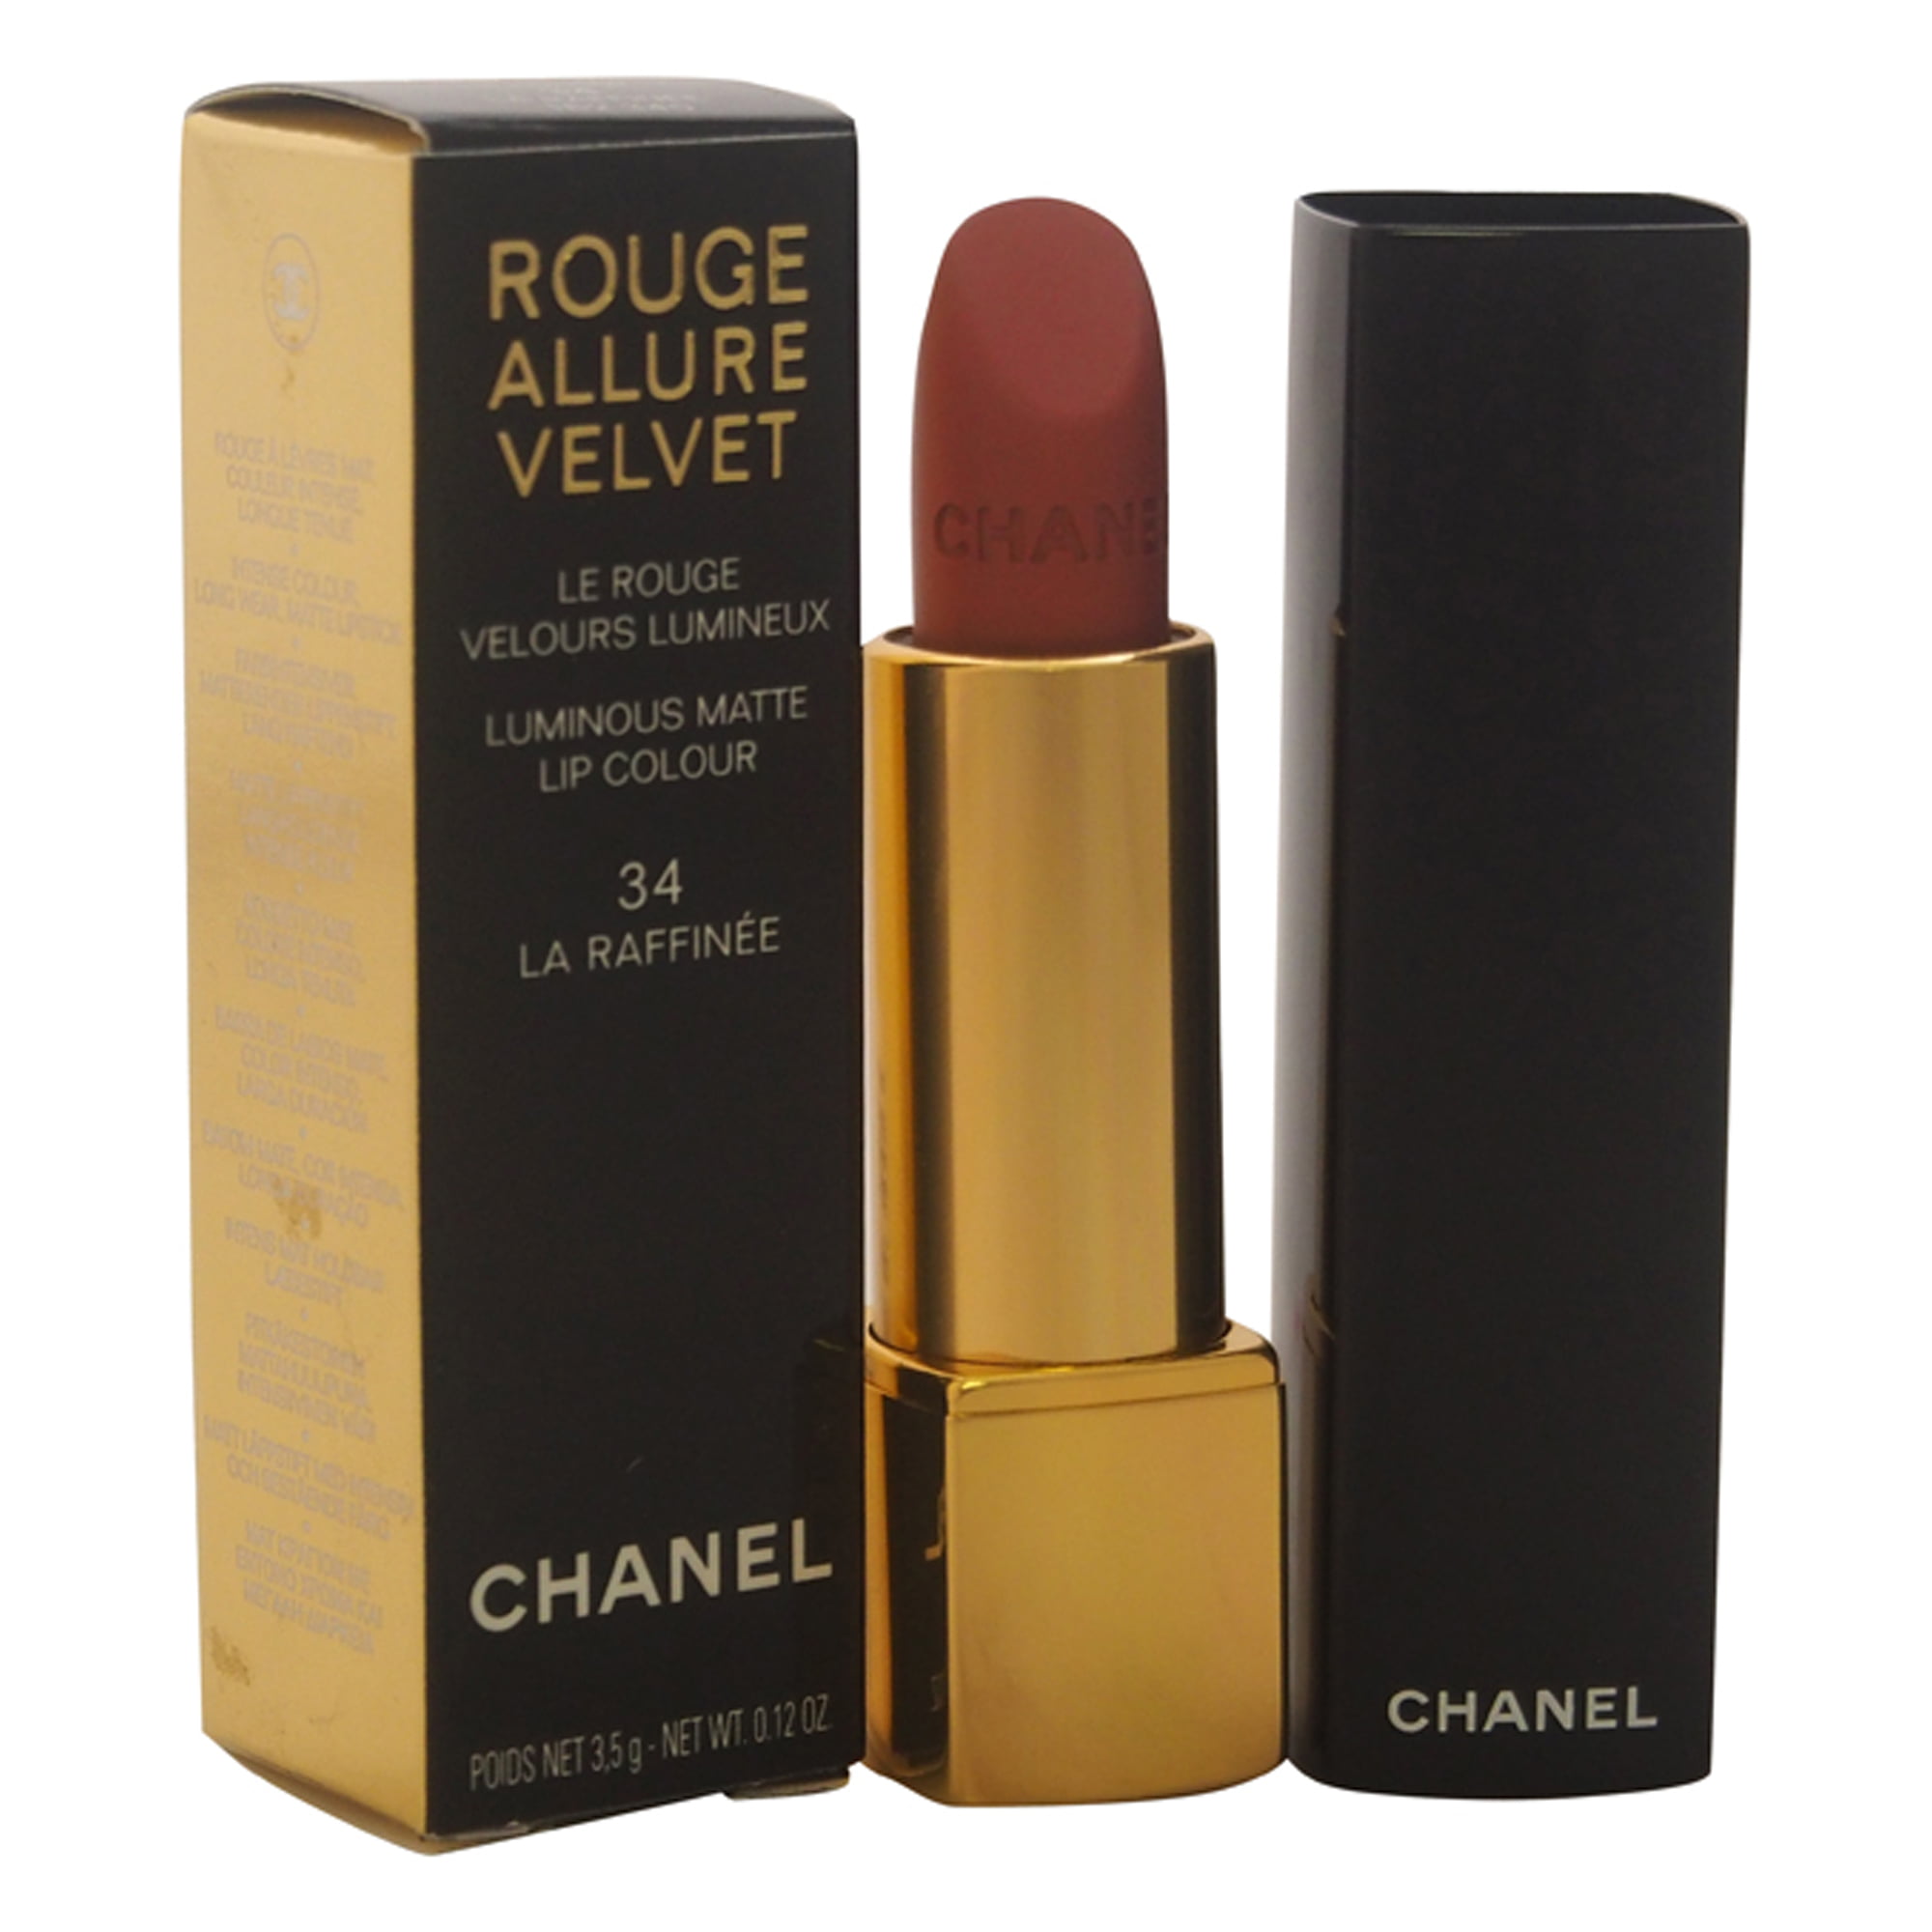 Rouge Allure Velvet Luminous Matte Lip Colour - # 34 La Raffinee by Chanel  for Women - 0.12 oz Lipst